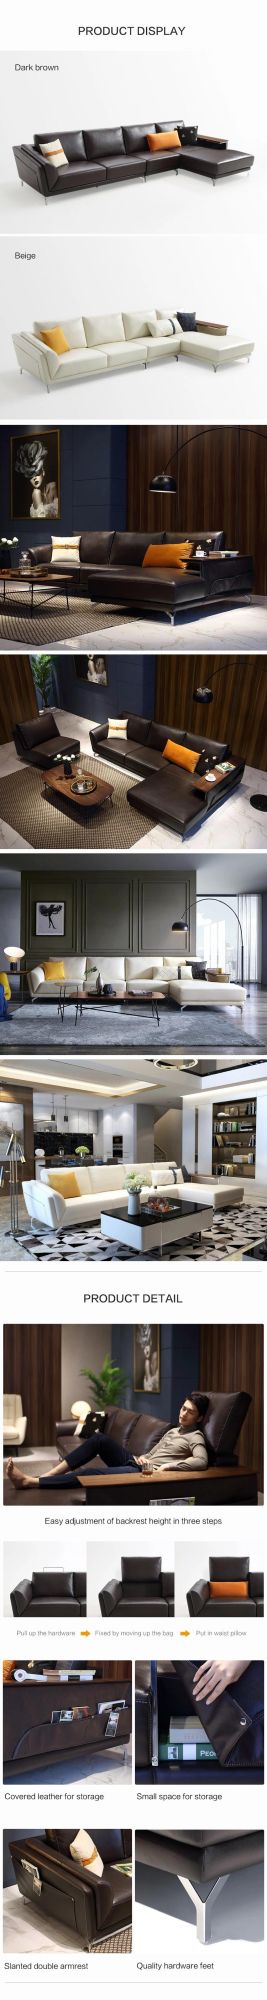 L-Shaped European Modern Furniture Dubai Set Leather Sofa with High Quality Rap1K